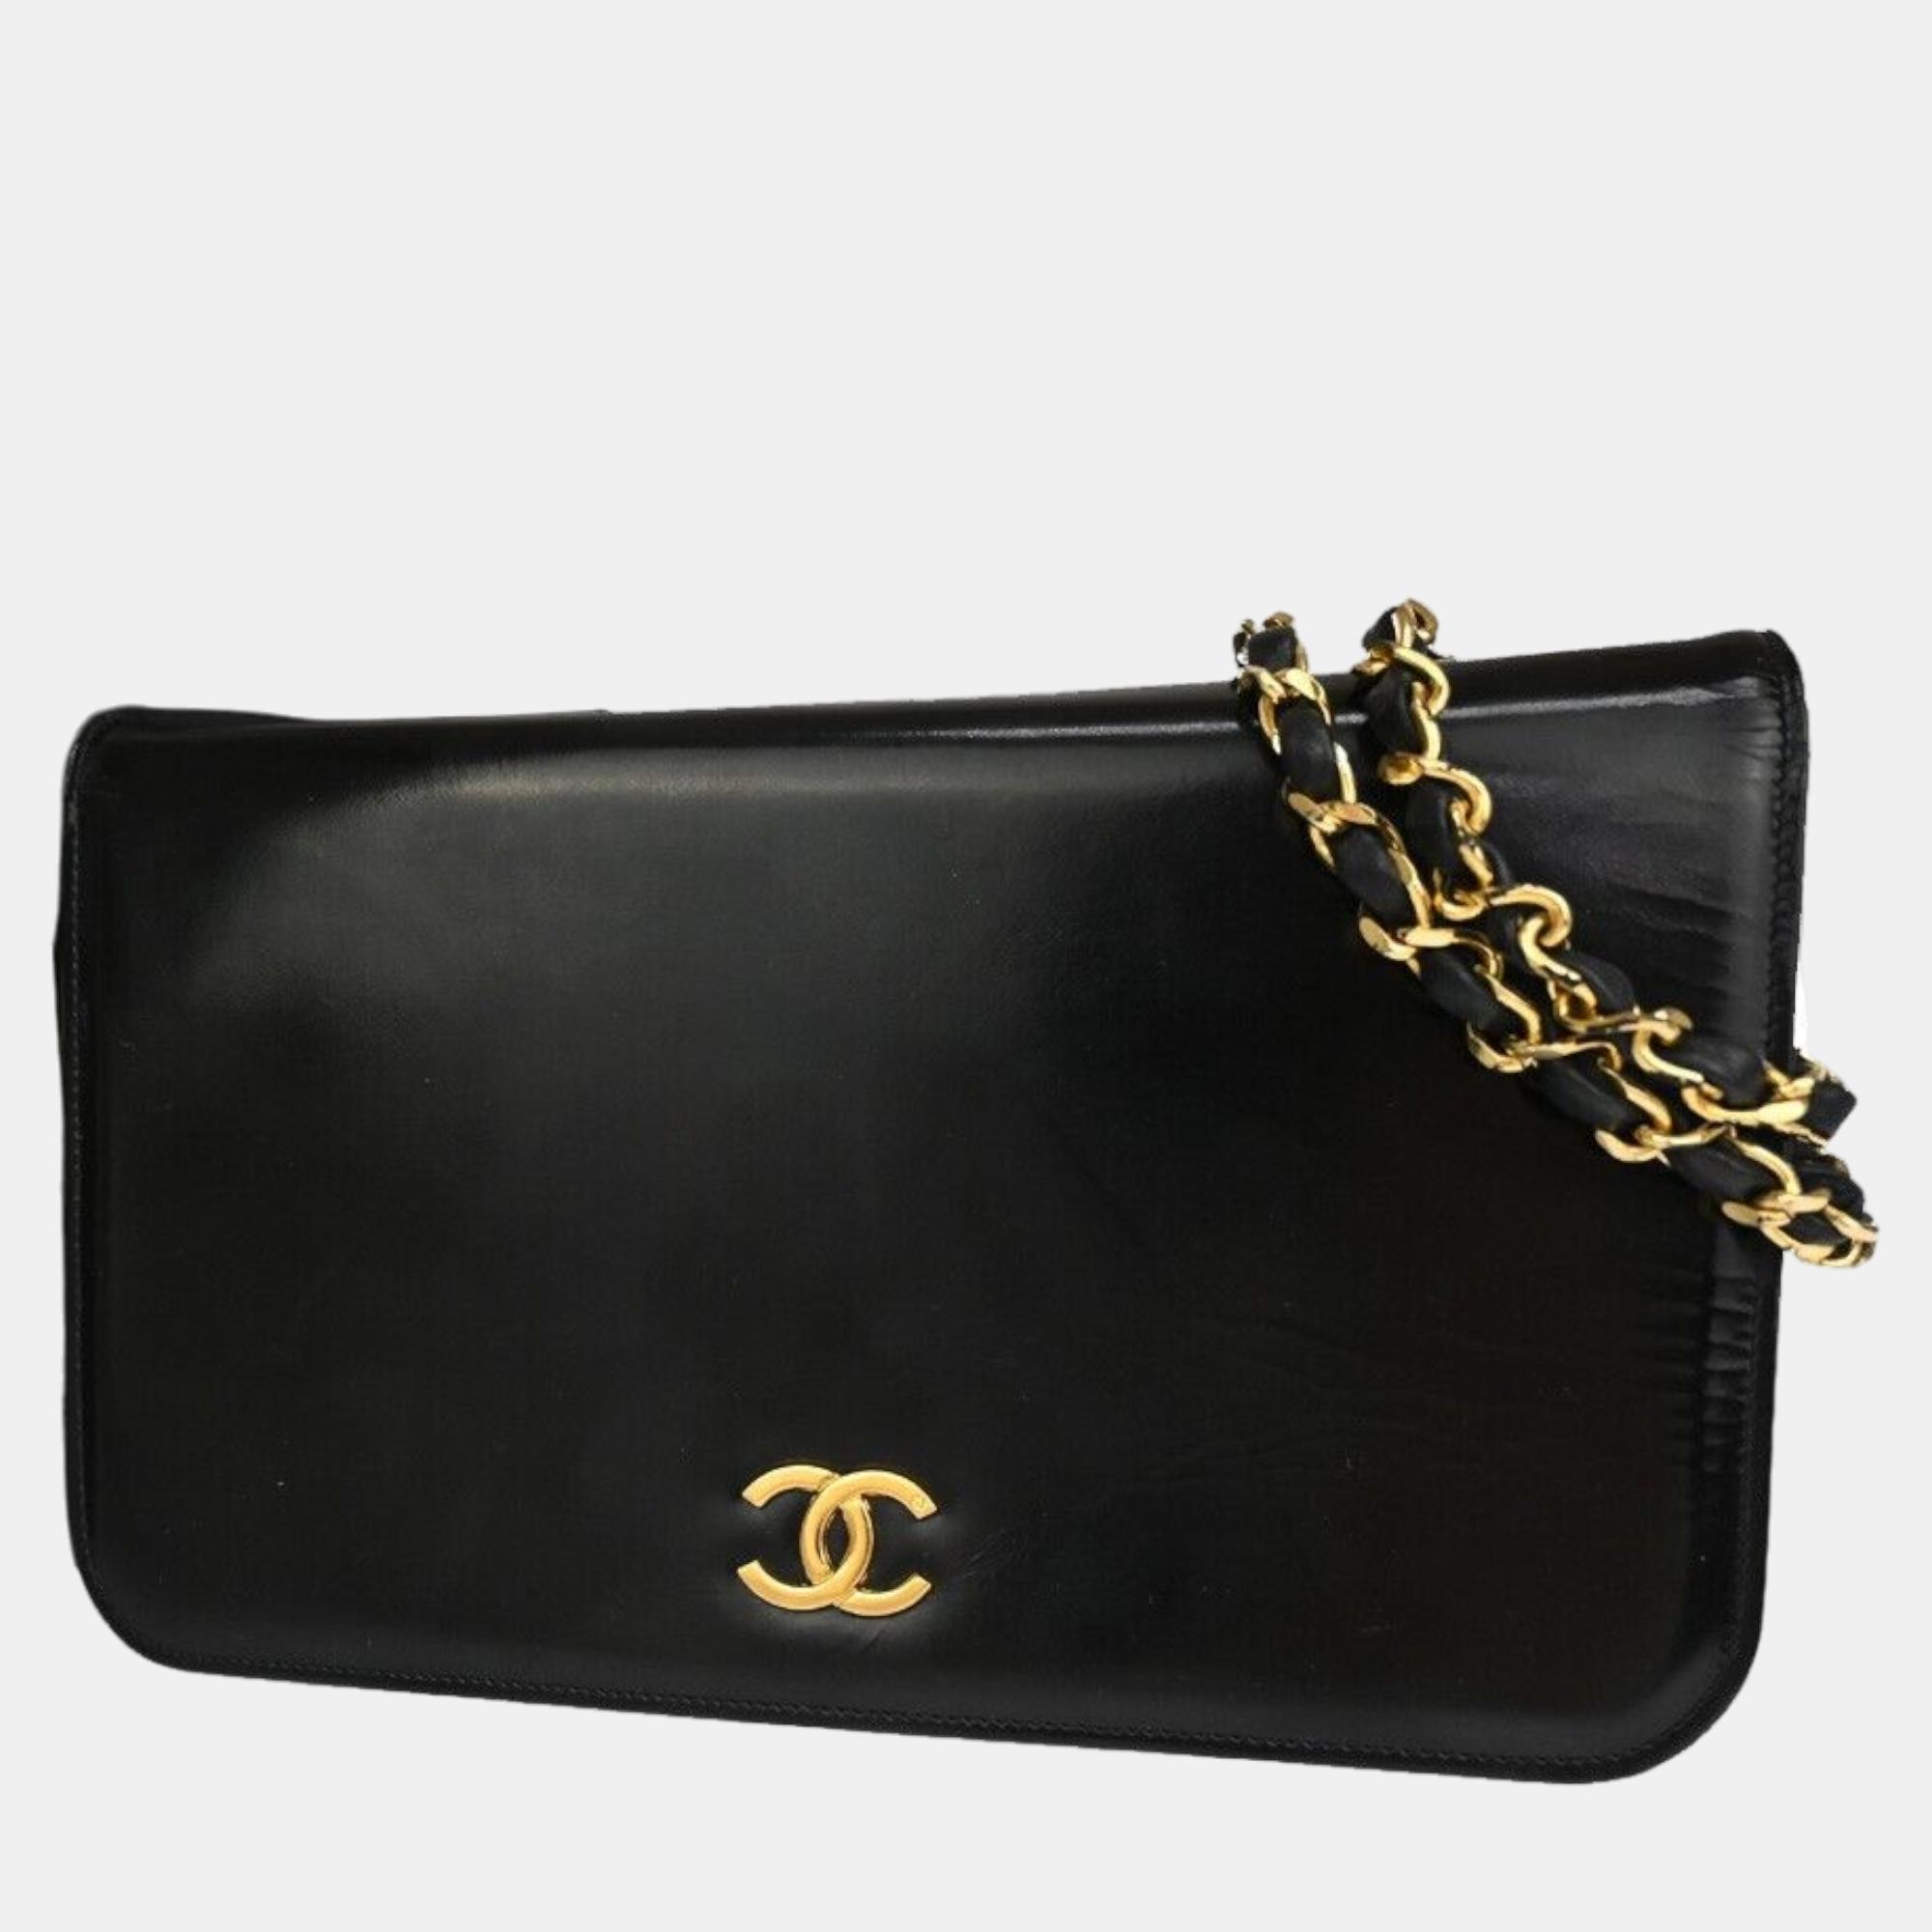 Chanel black leather full flap bag